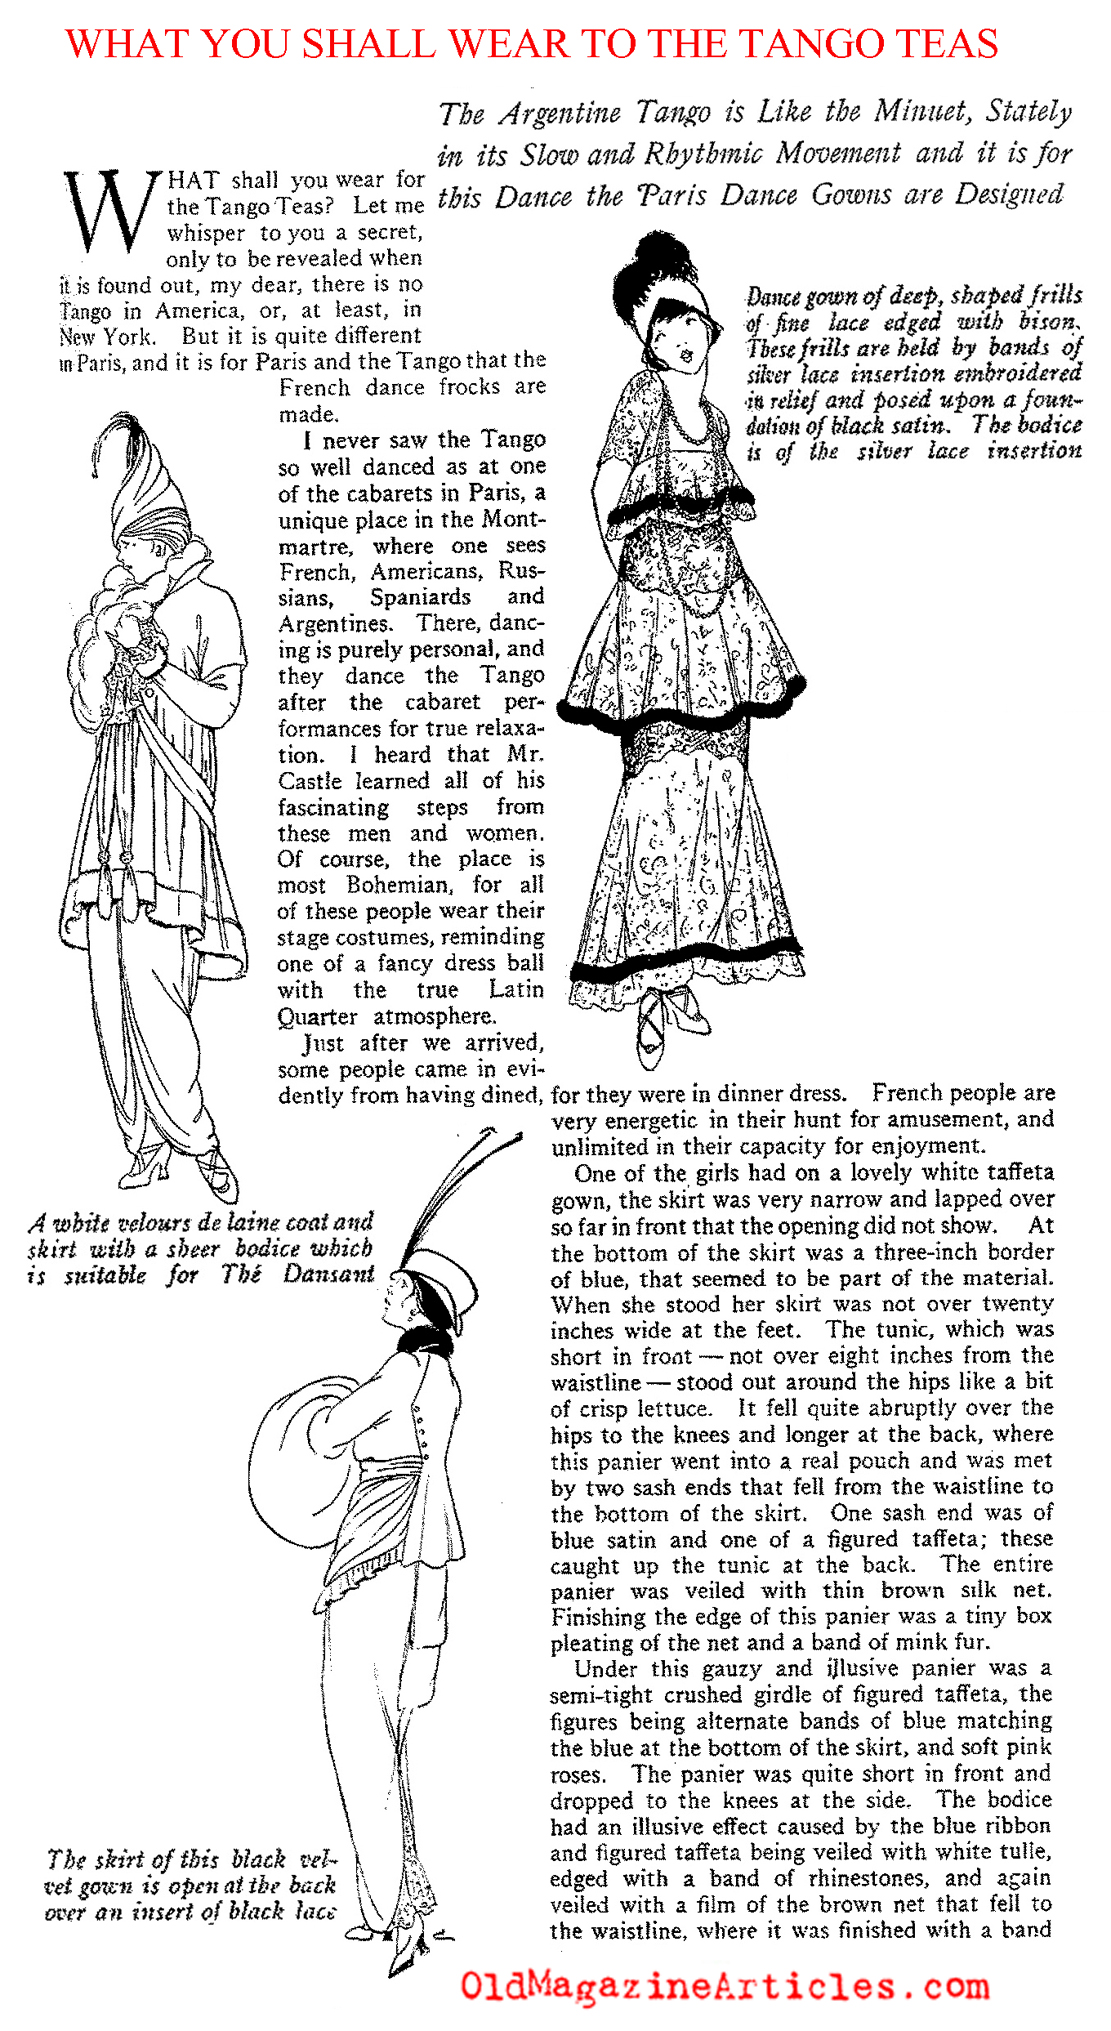 Tango Fashions (Vanity Fair Magazine, 1913)